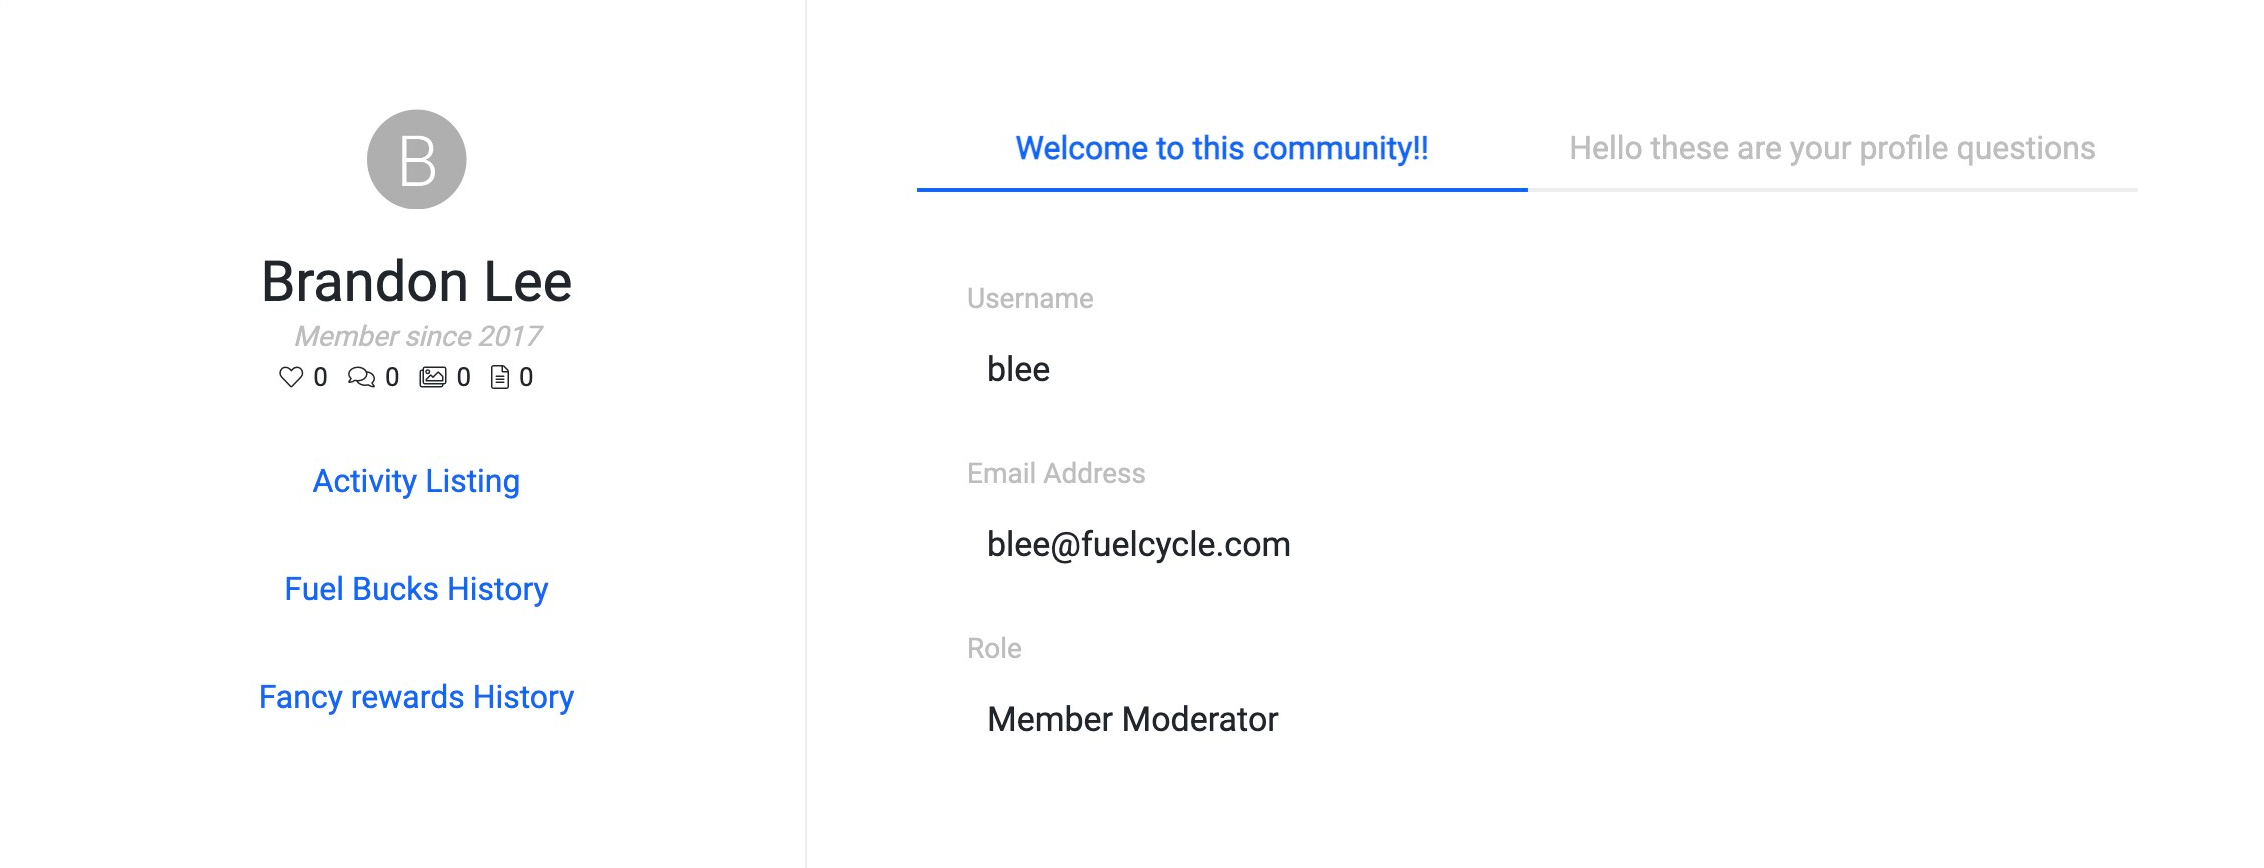 Community_Member_Profile.jpg